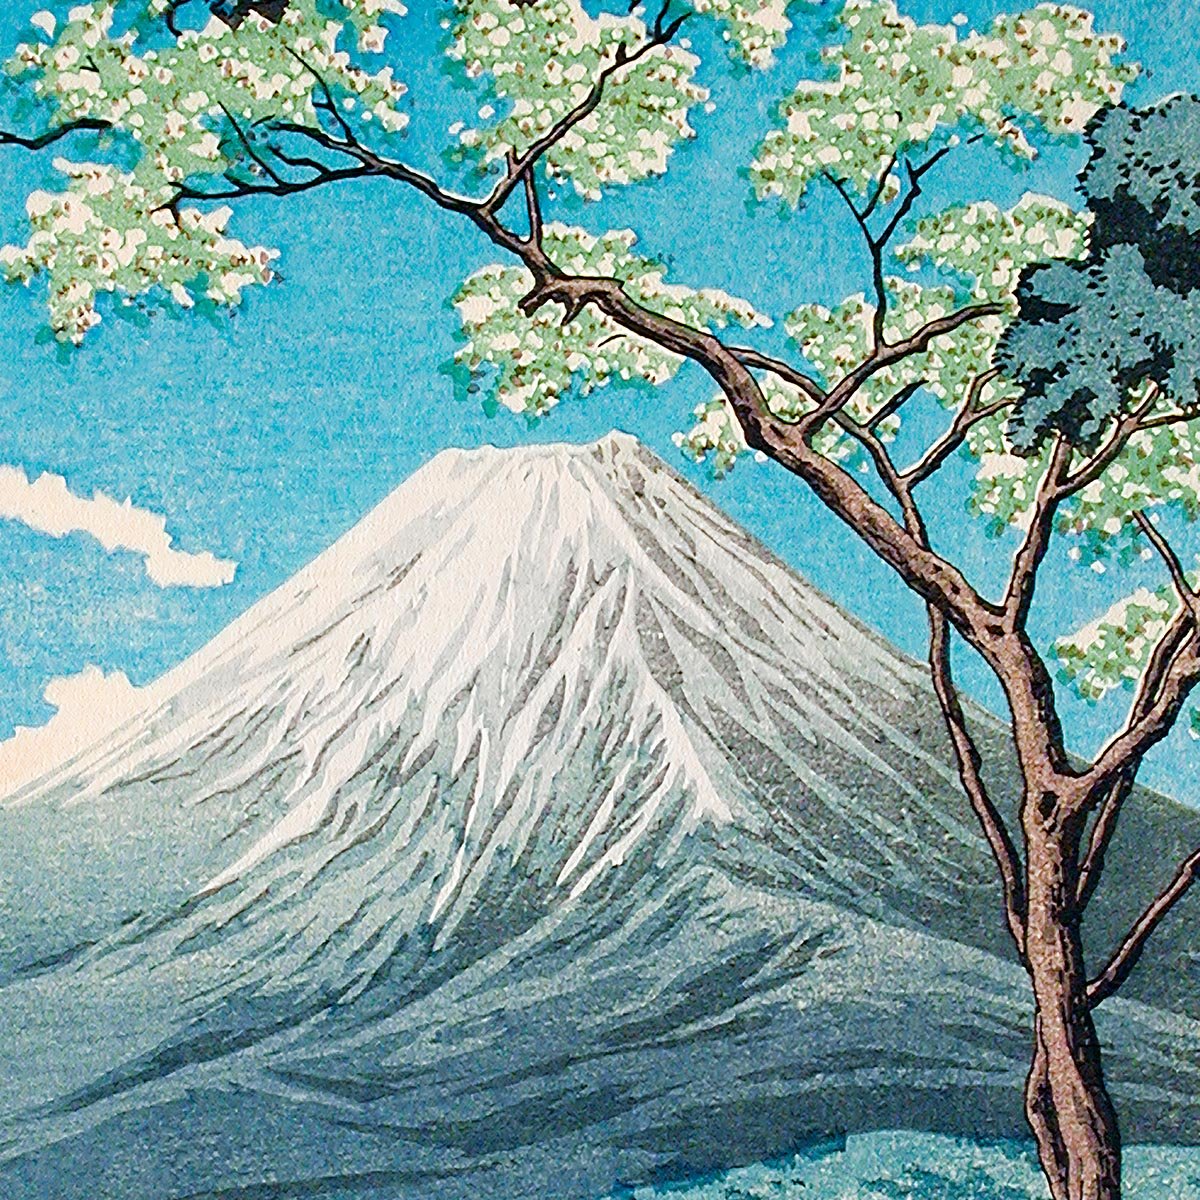 Mount Fuji from Lake Yamanaka by Takahashi Shōtei